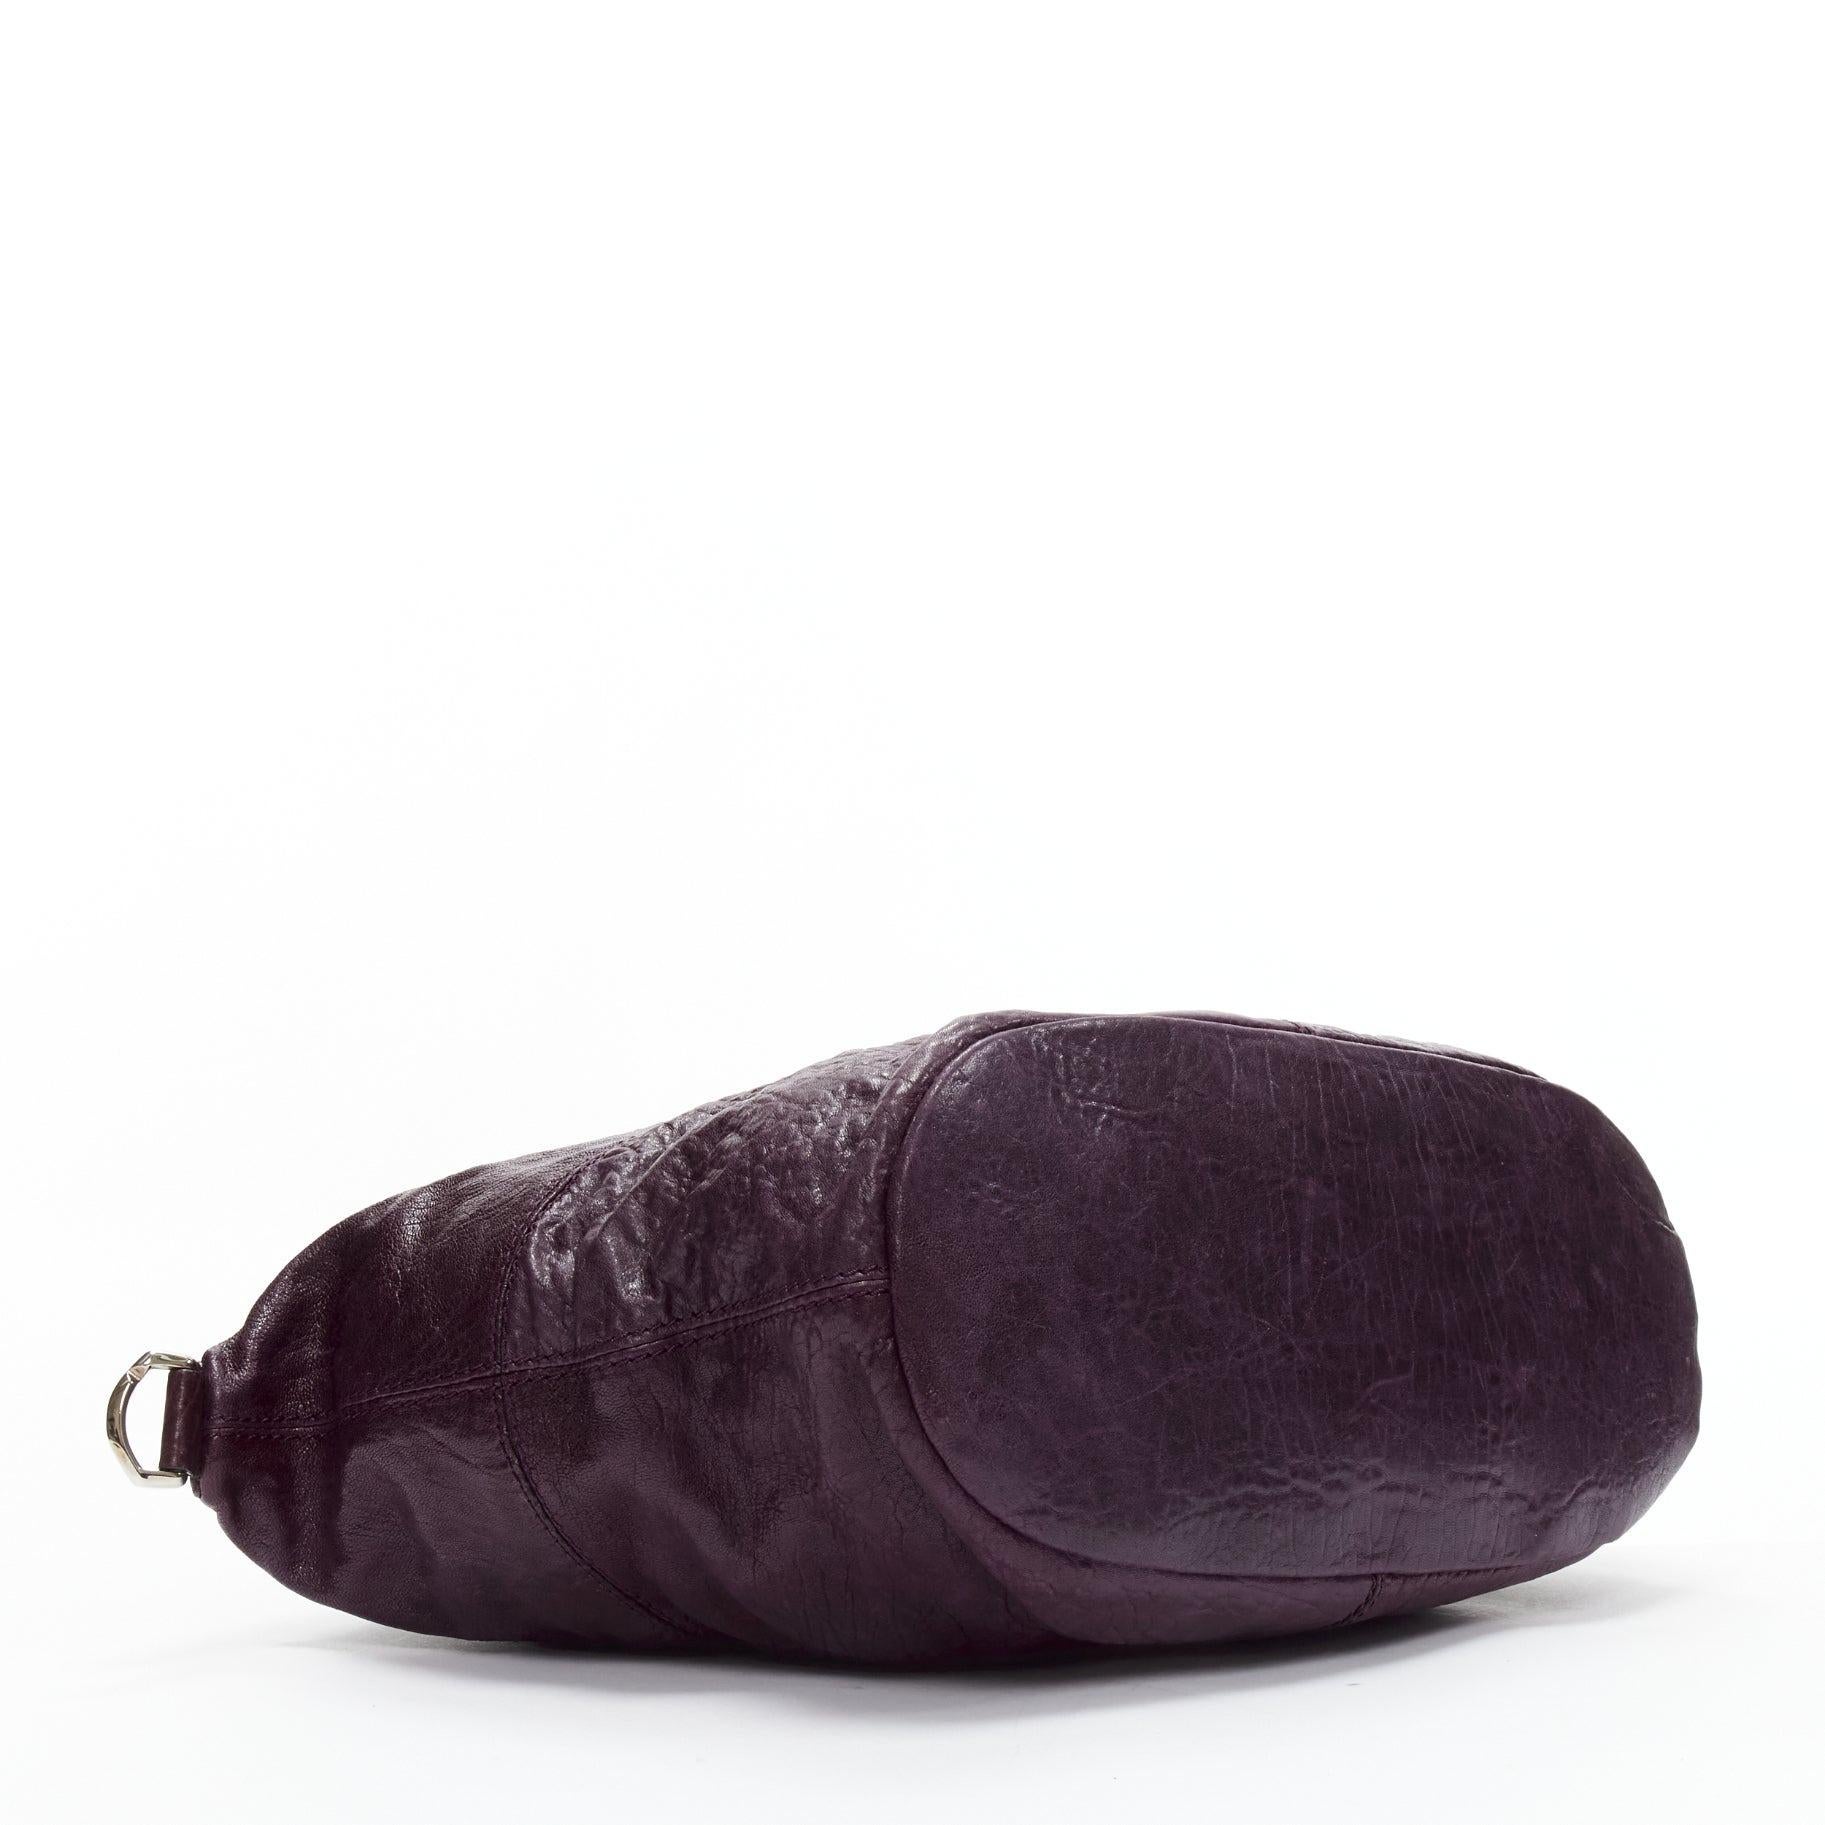 GIVENCHY Nightingale dark purple leather SHW top handle satchel bag 2